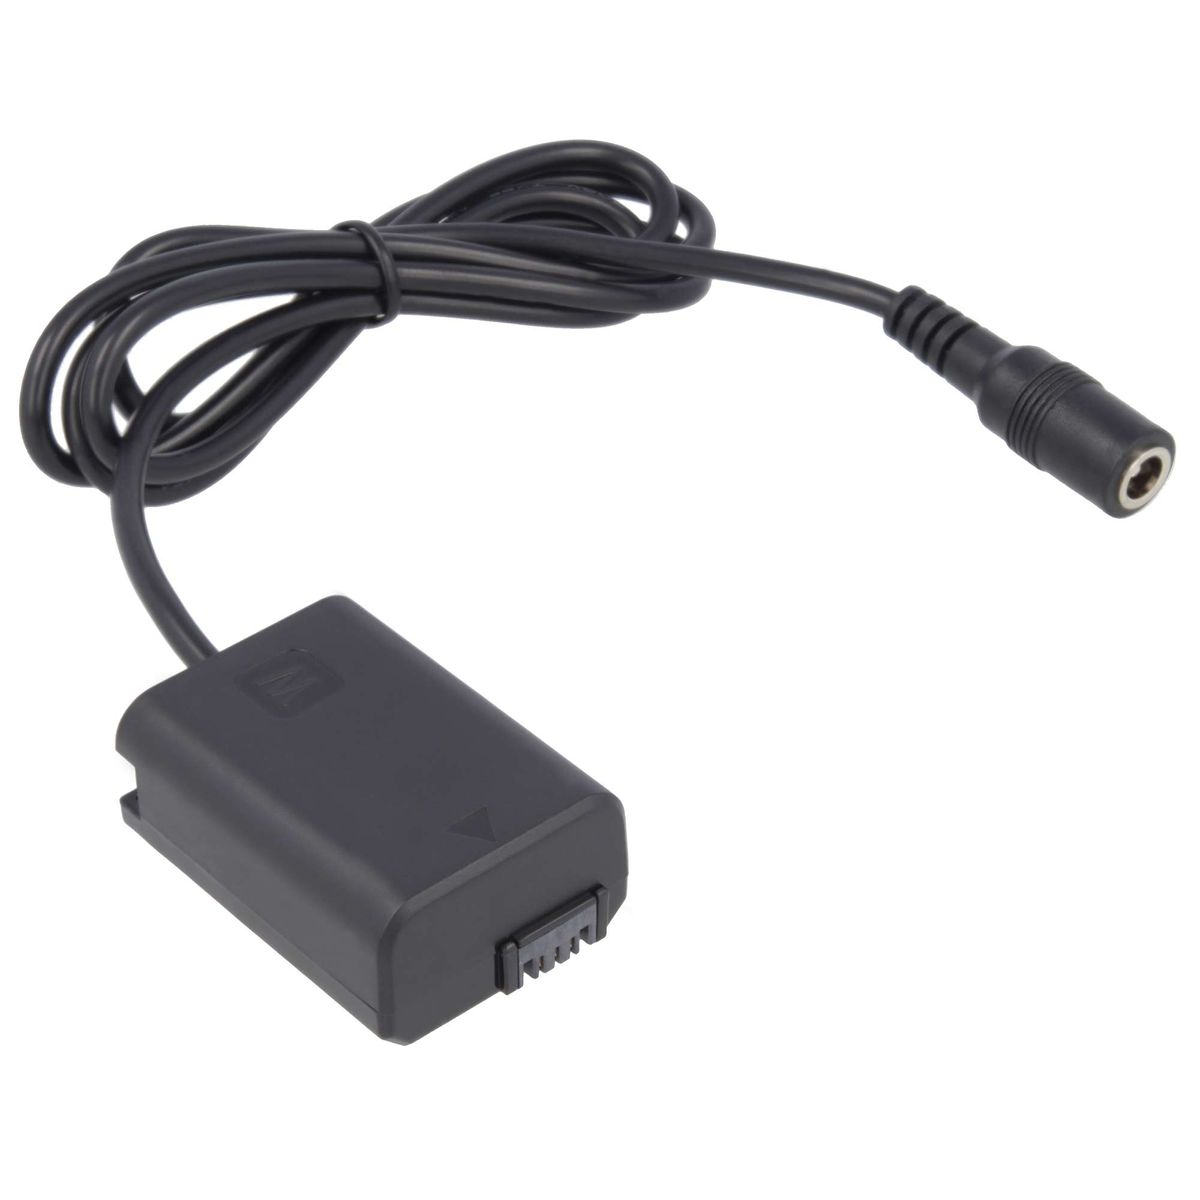 AKKU-KING USB-C Adapter + Kuppler mit Ladegerät Angabe Sony, keine Sony AC-PW20 kompatibel